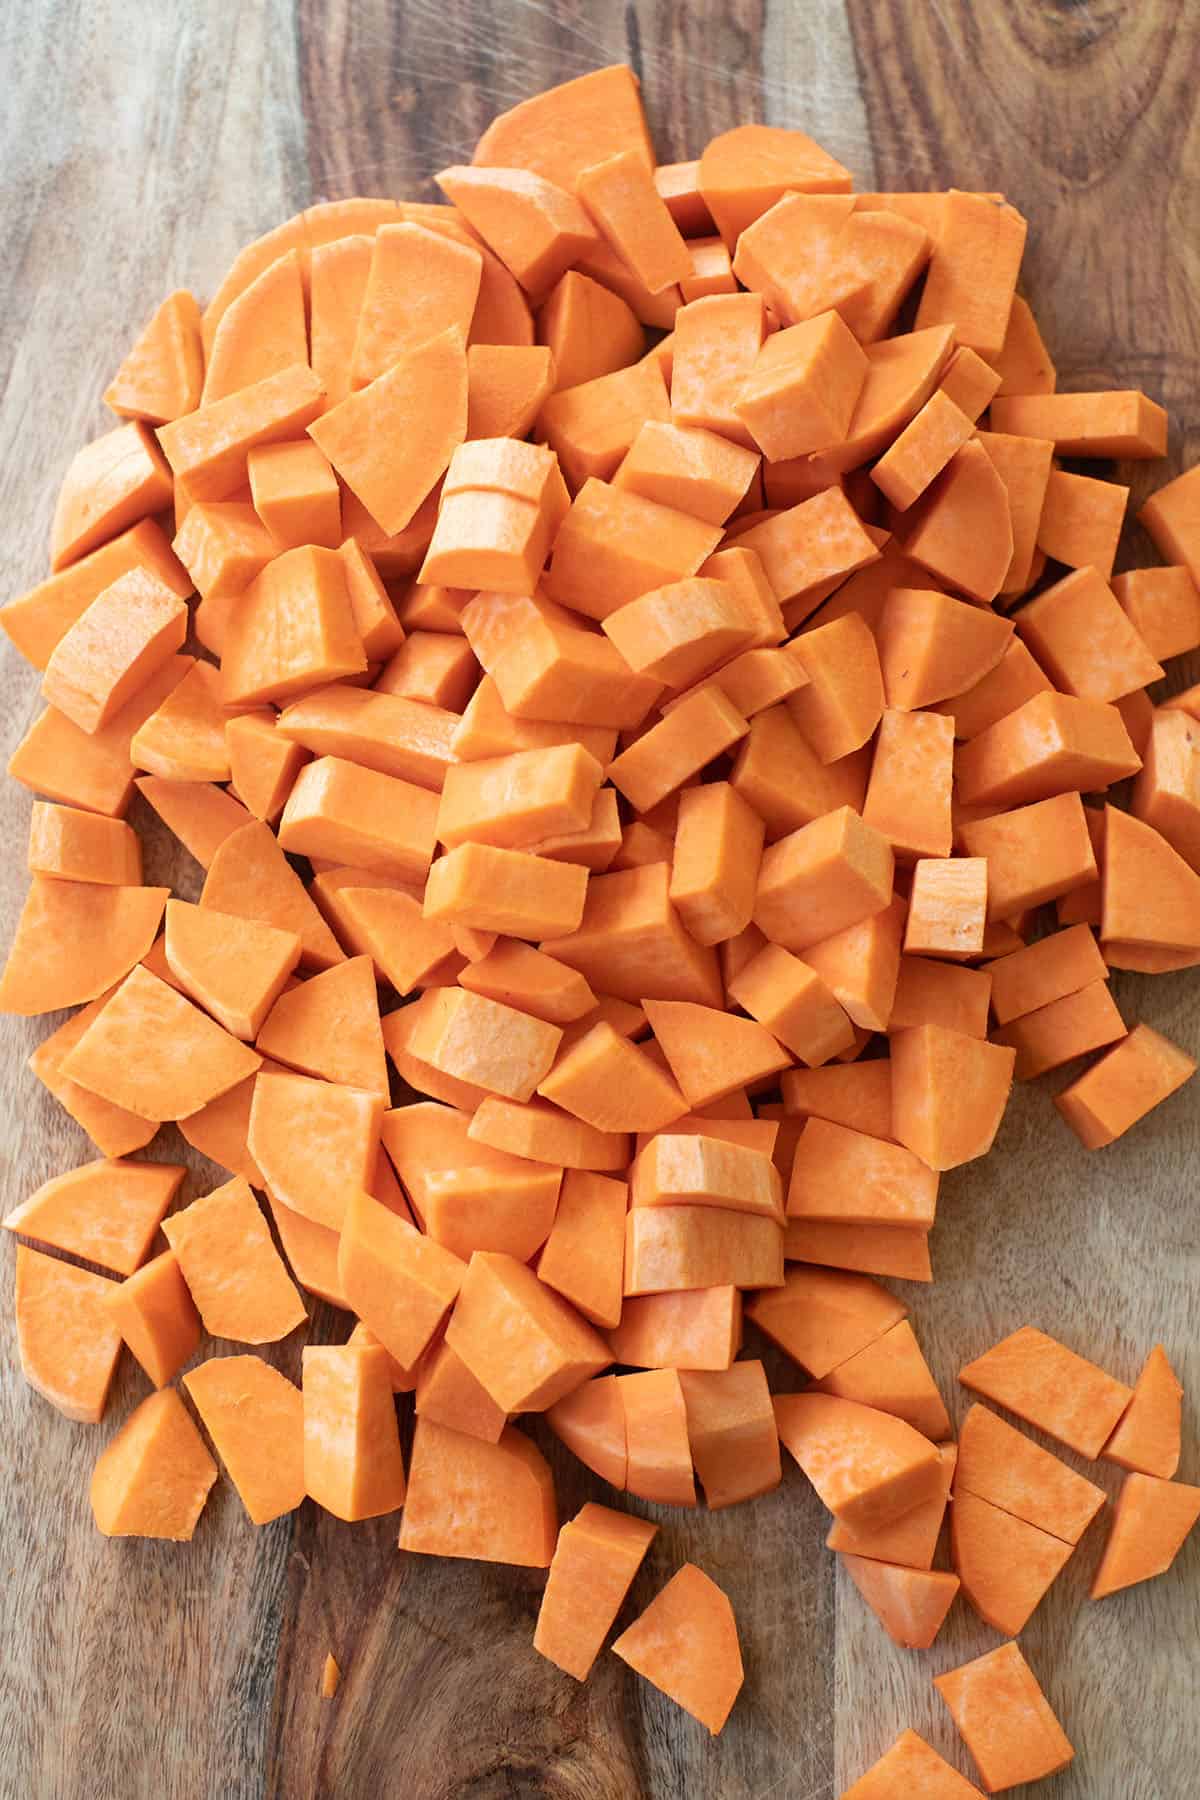 cubed sweet potatoes 